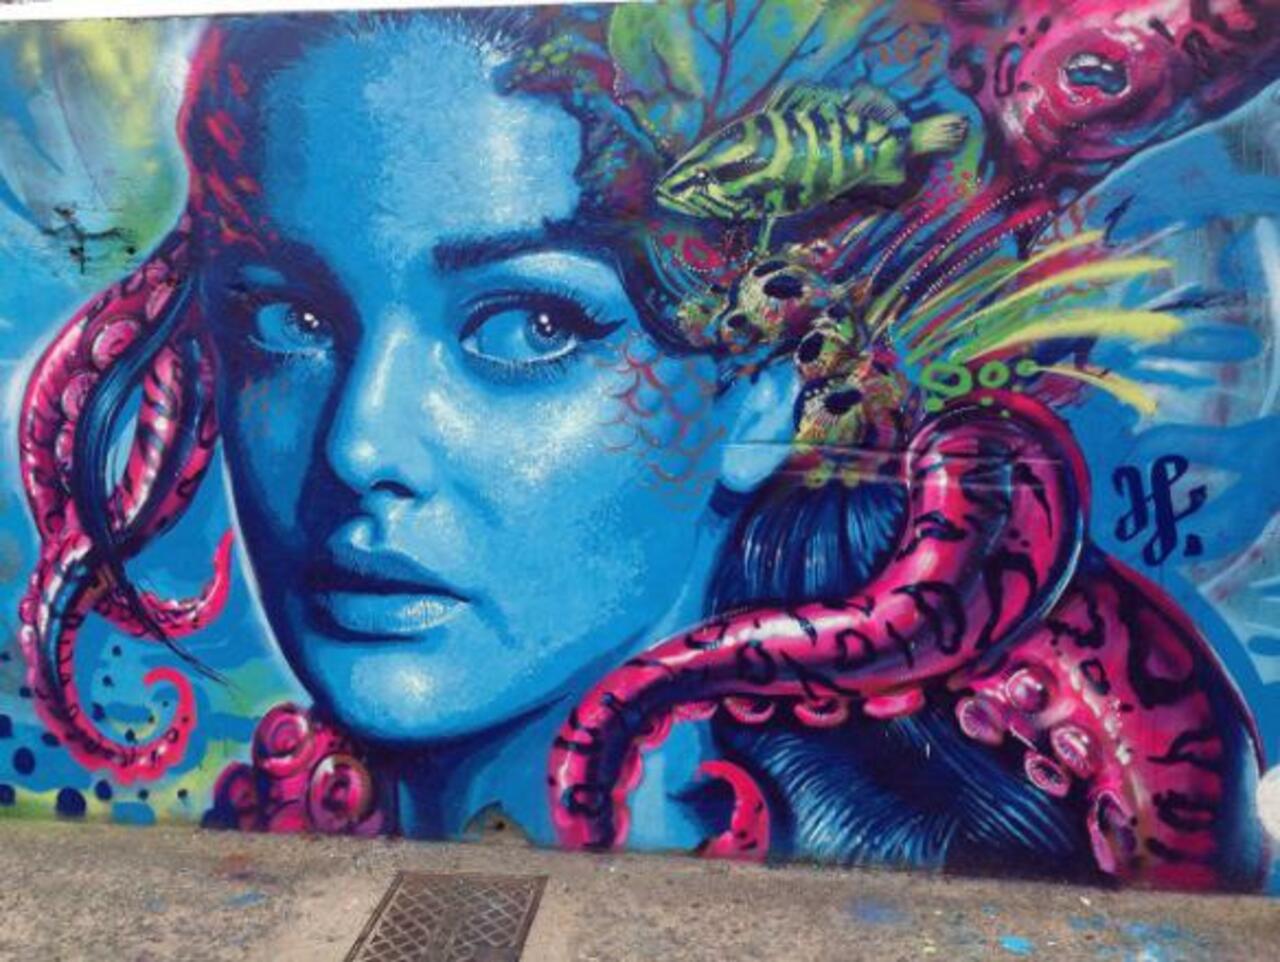 Portrait #mural entitled "The Octopus Lady" in Brazil by #graffiti artist Valdivaldi. 

http://wp.me/p2dpFM-2B2 http://t.co/UOdKBDa3Lv